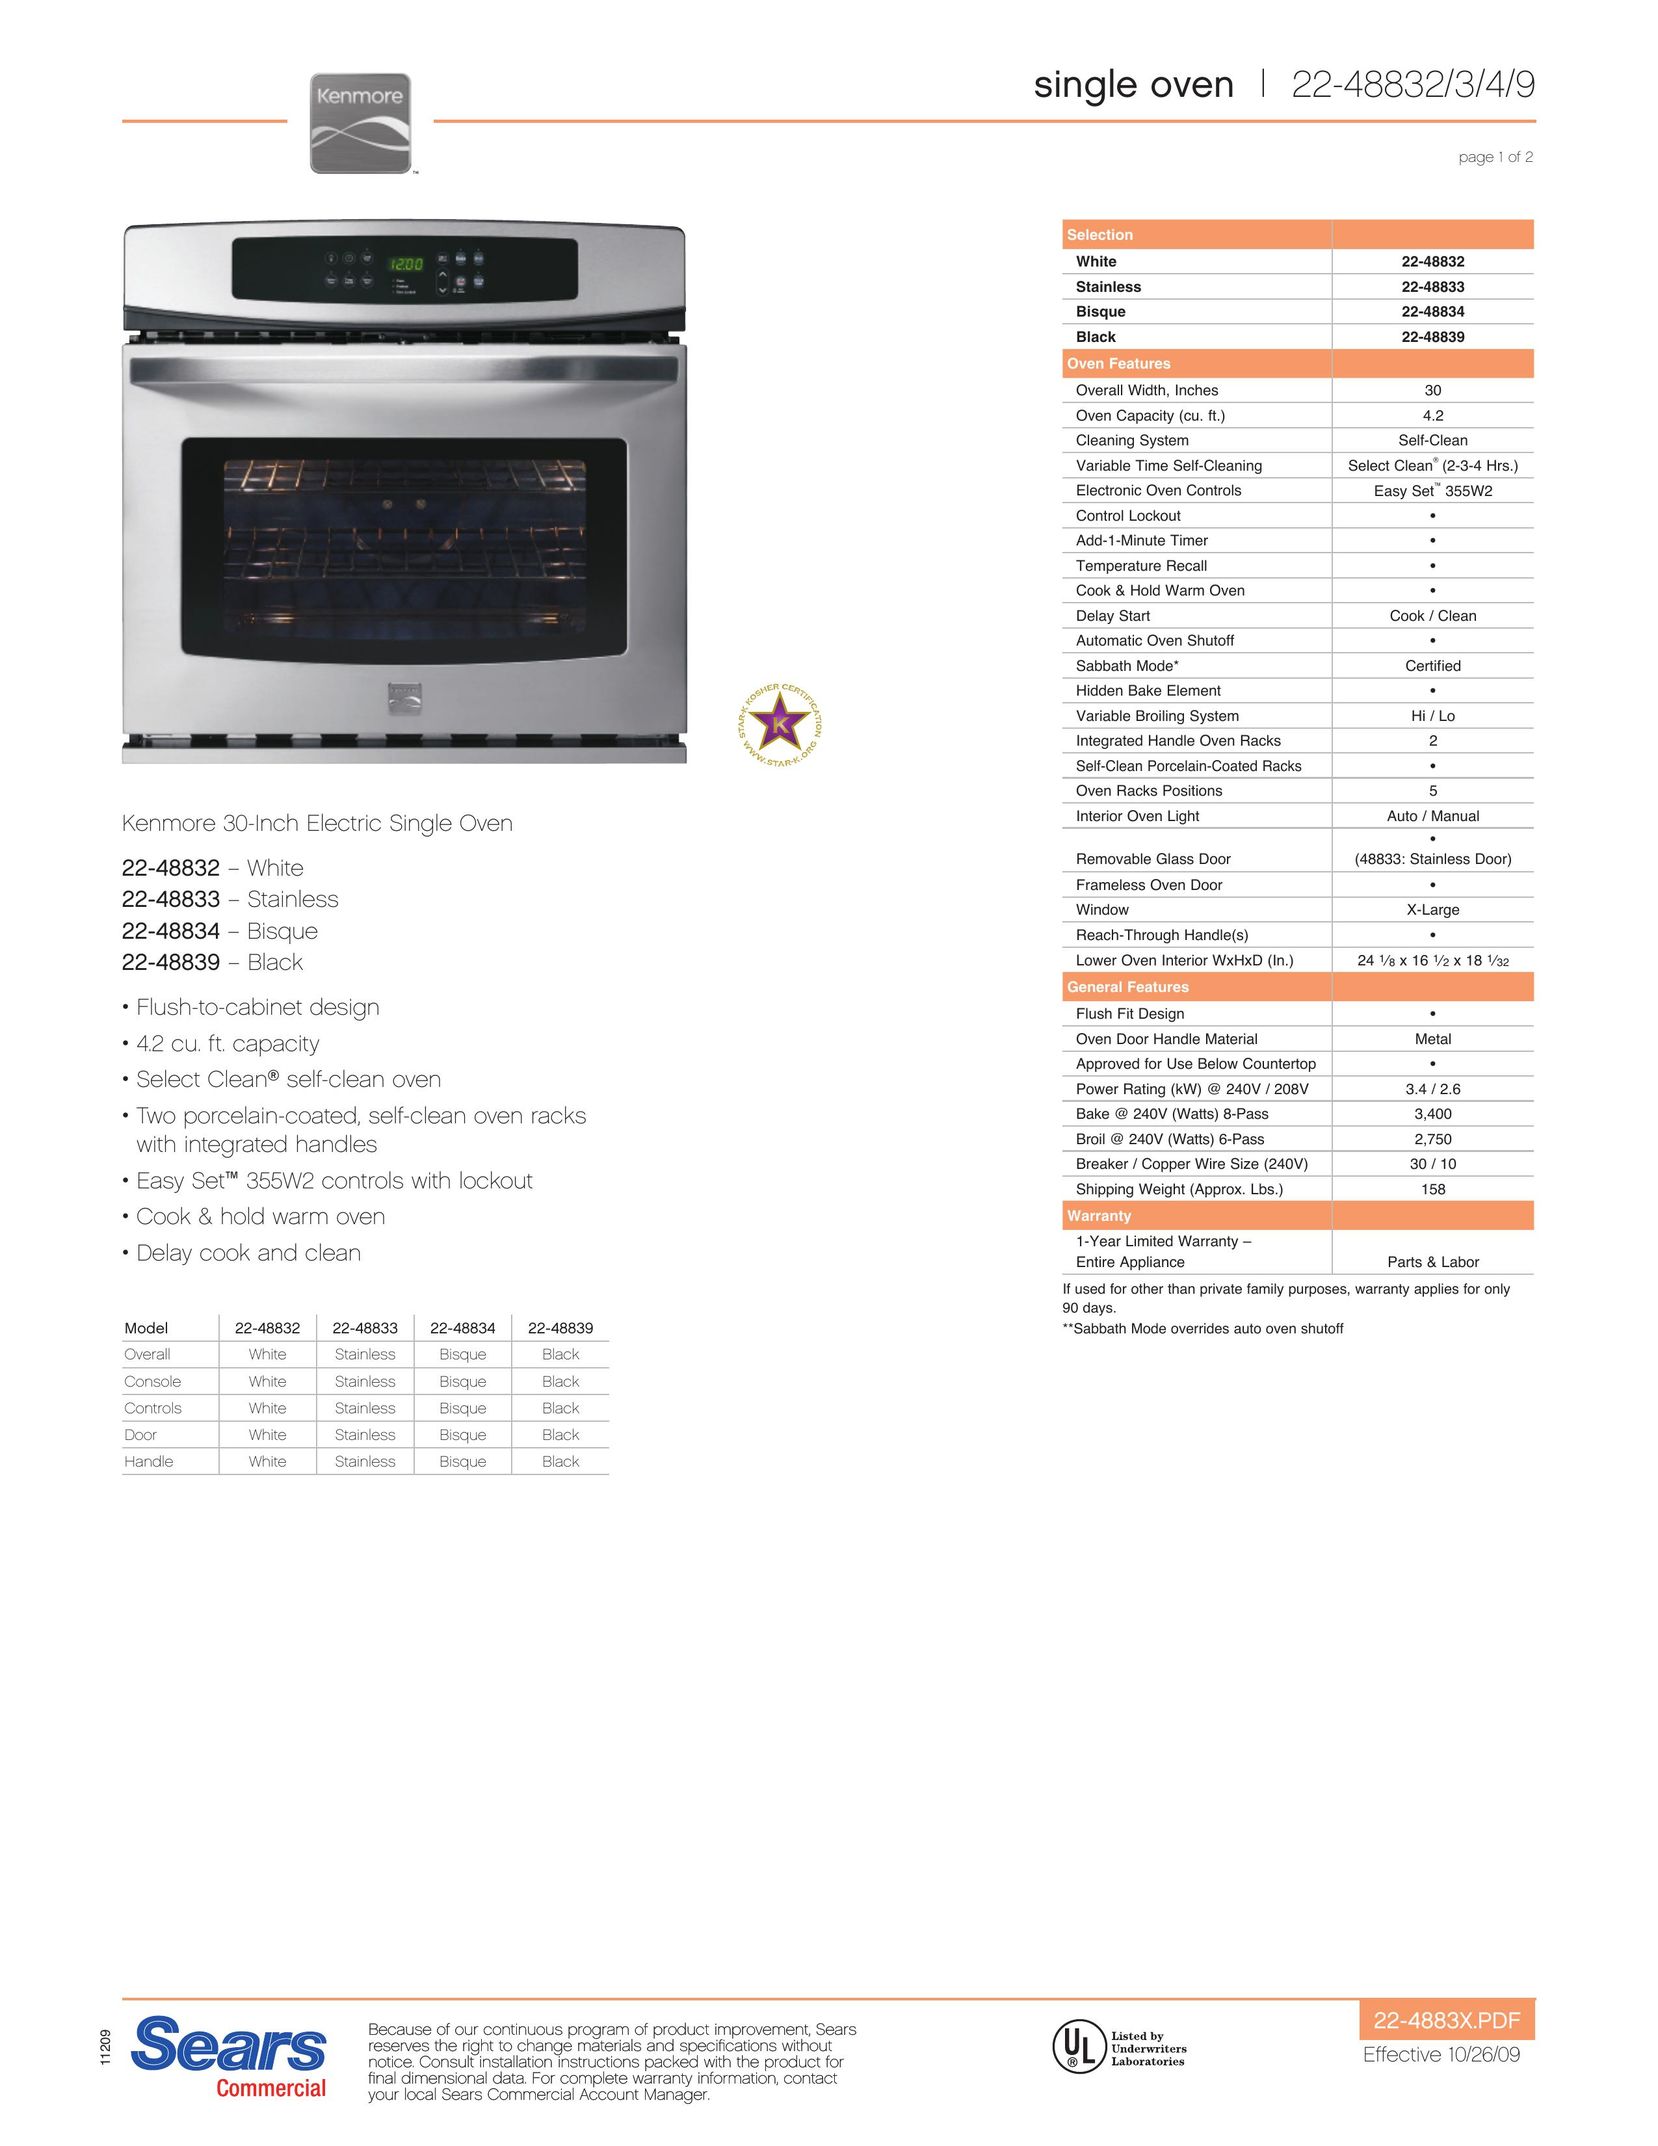 Kenmore 22-48839 Oven User Manual